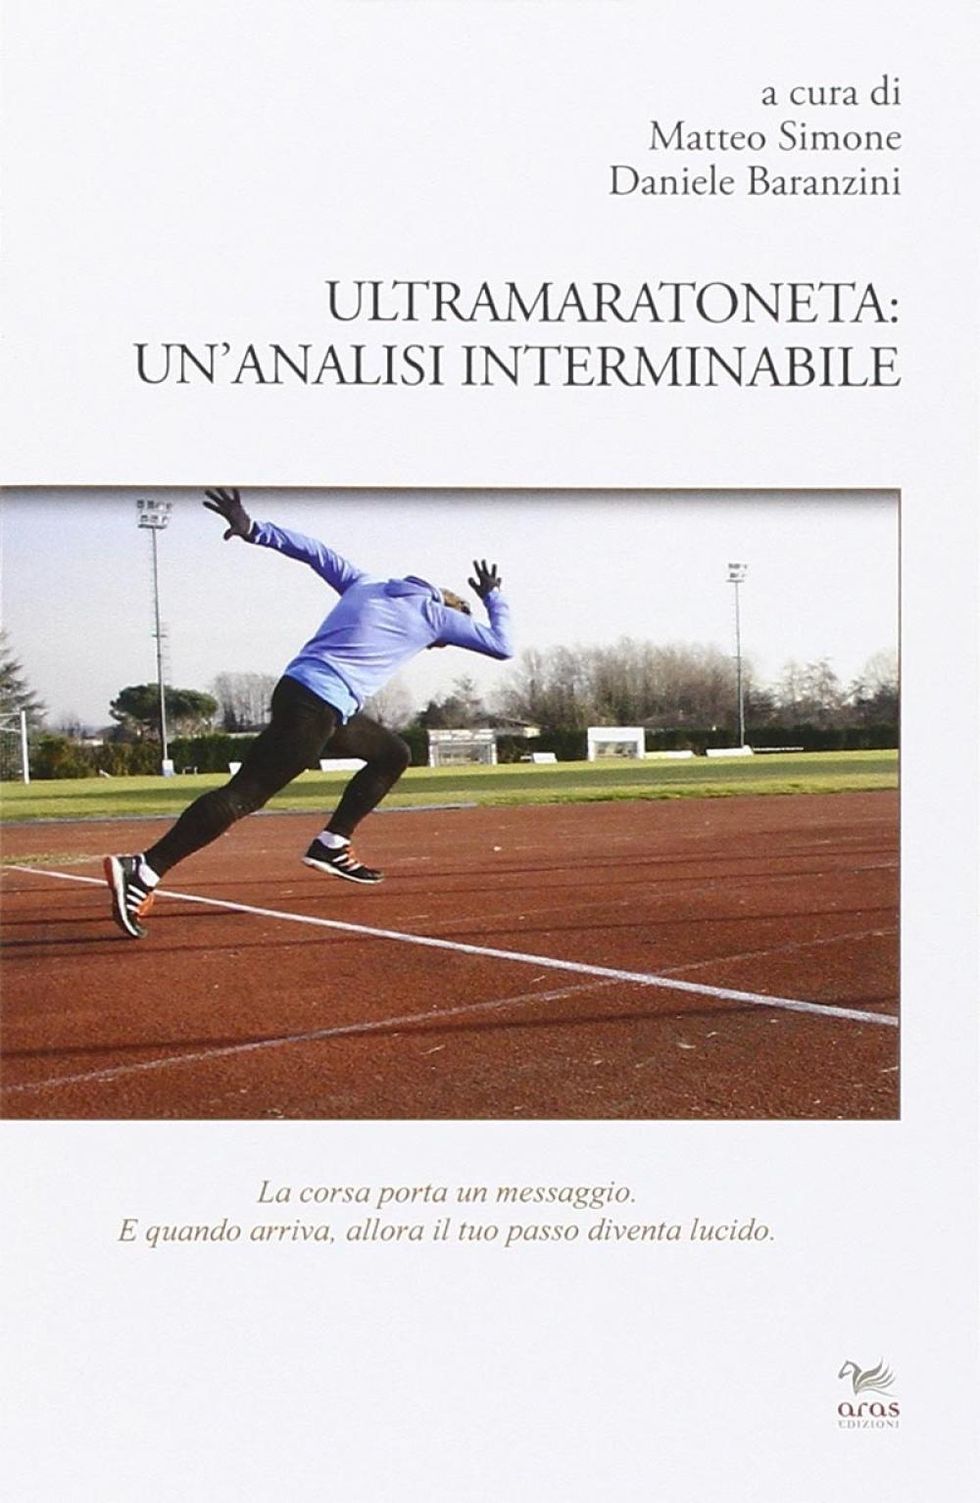 Ultra-maratoneta: un’analisi interminabile, di Matteo Simone e Daniele Baranzini